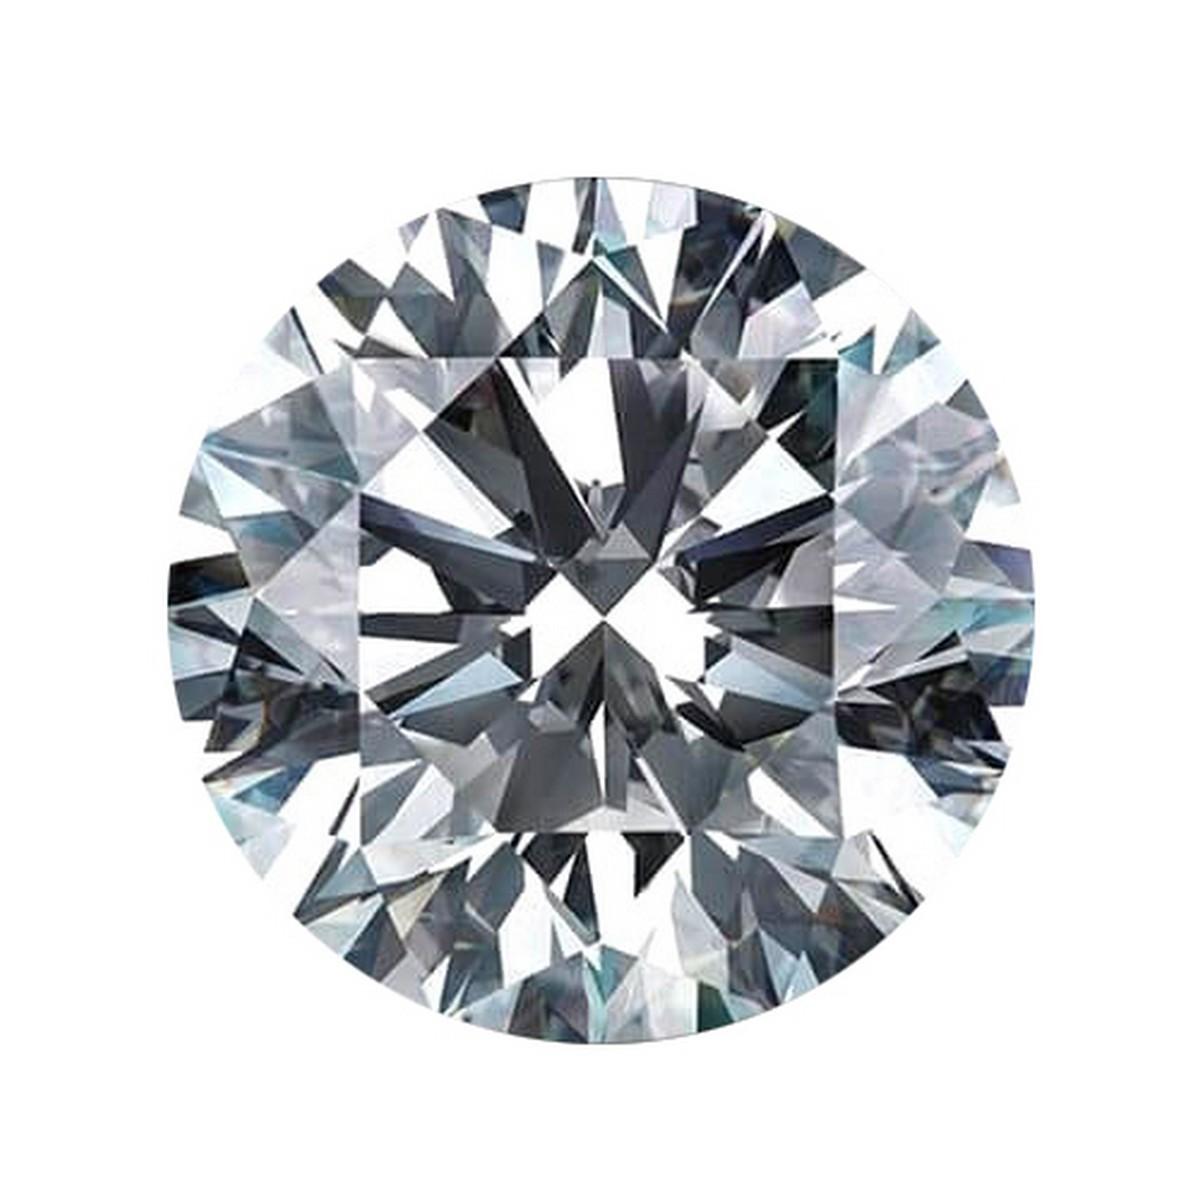 1.67 ctw. VVS2 IGI Certified Round Brilliant Cut Loose Diamond (LAB GROWN)